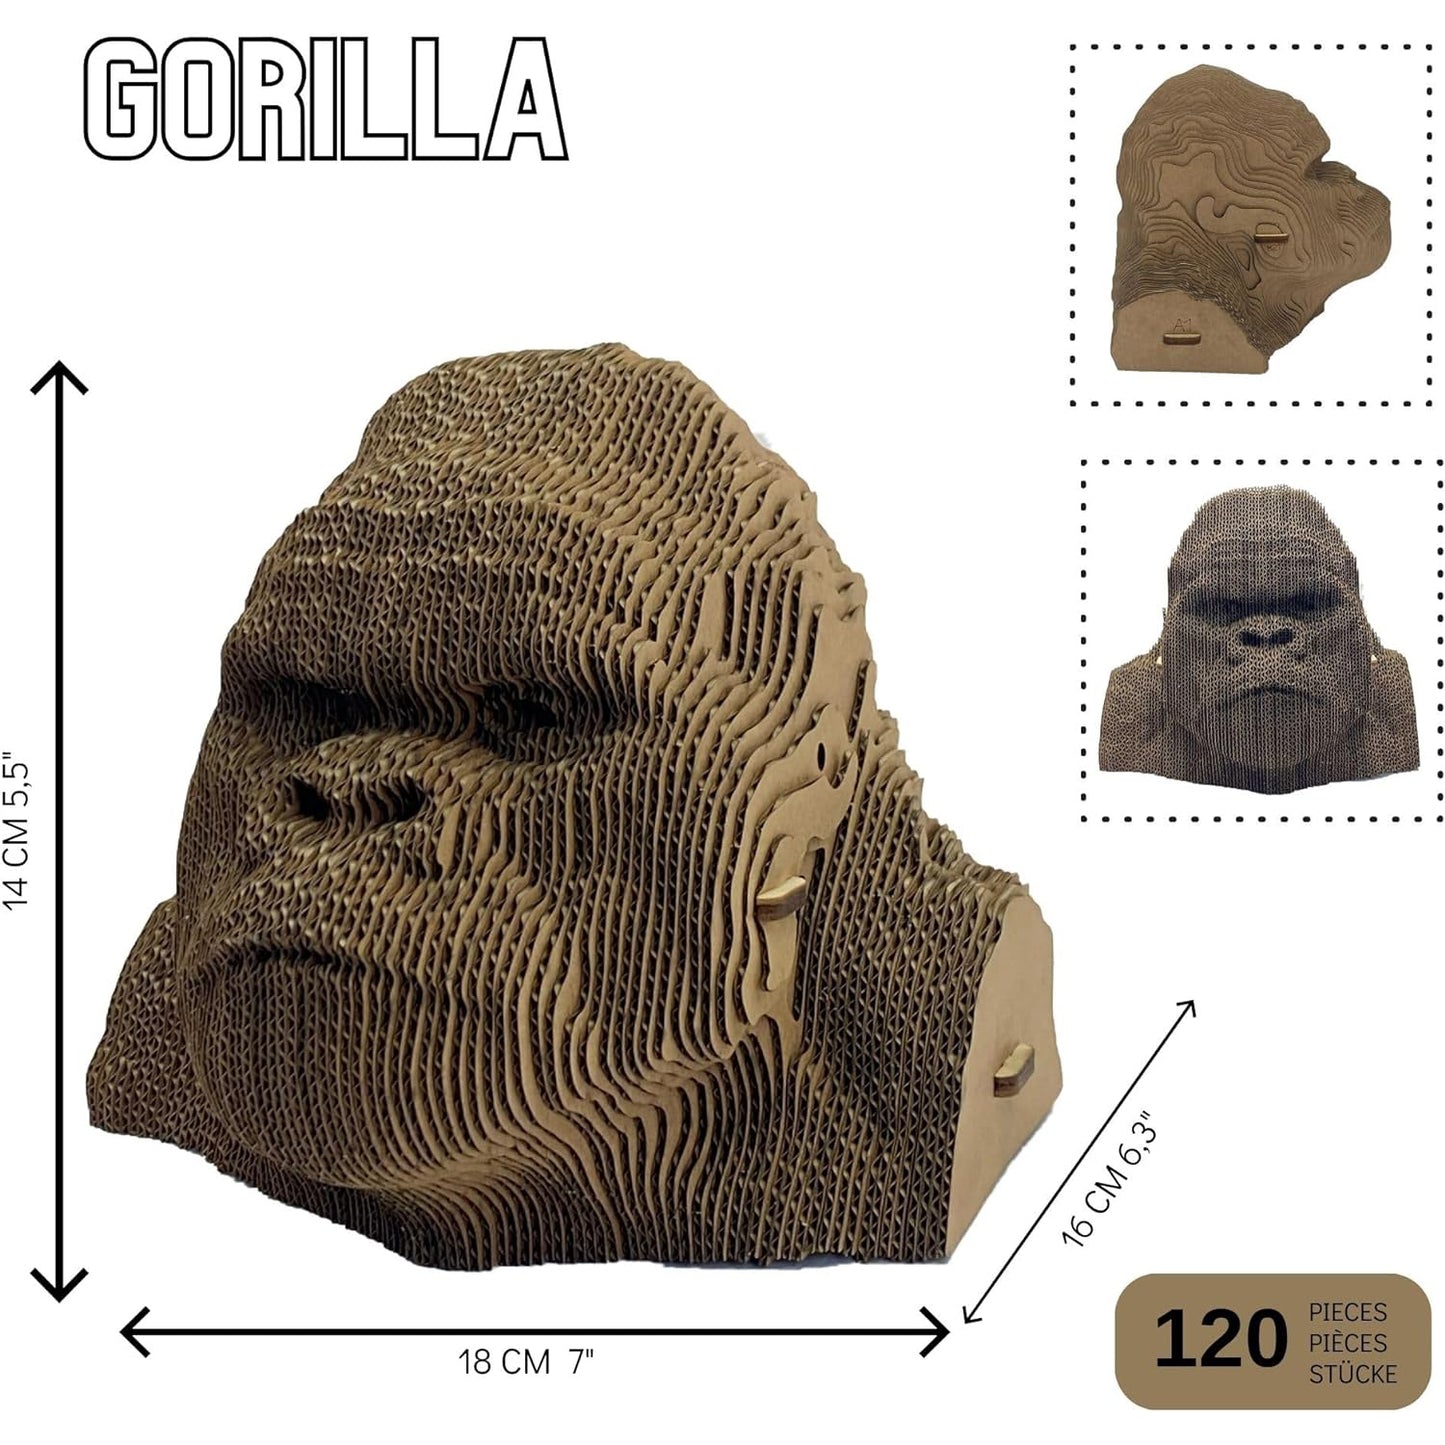 3D-pusselhuvudskulptur gjord av wellpapp - Gorilla